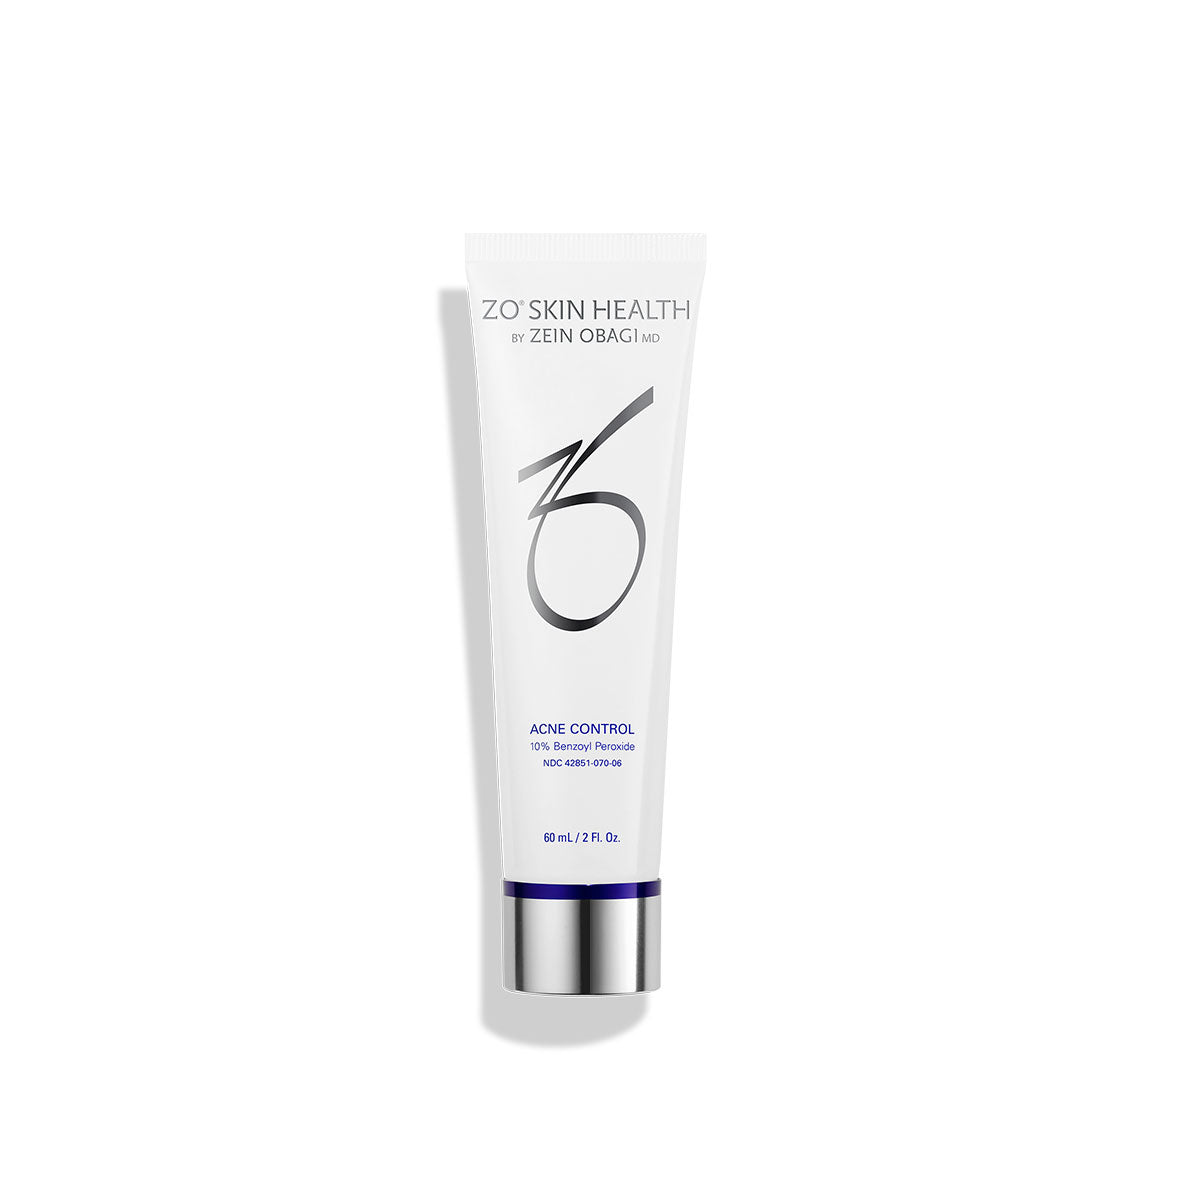 60mL tube of zo skin health acne control cream with 10% benzoyl peroxide blemish treatment cream